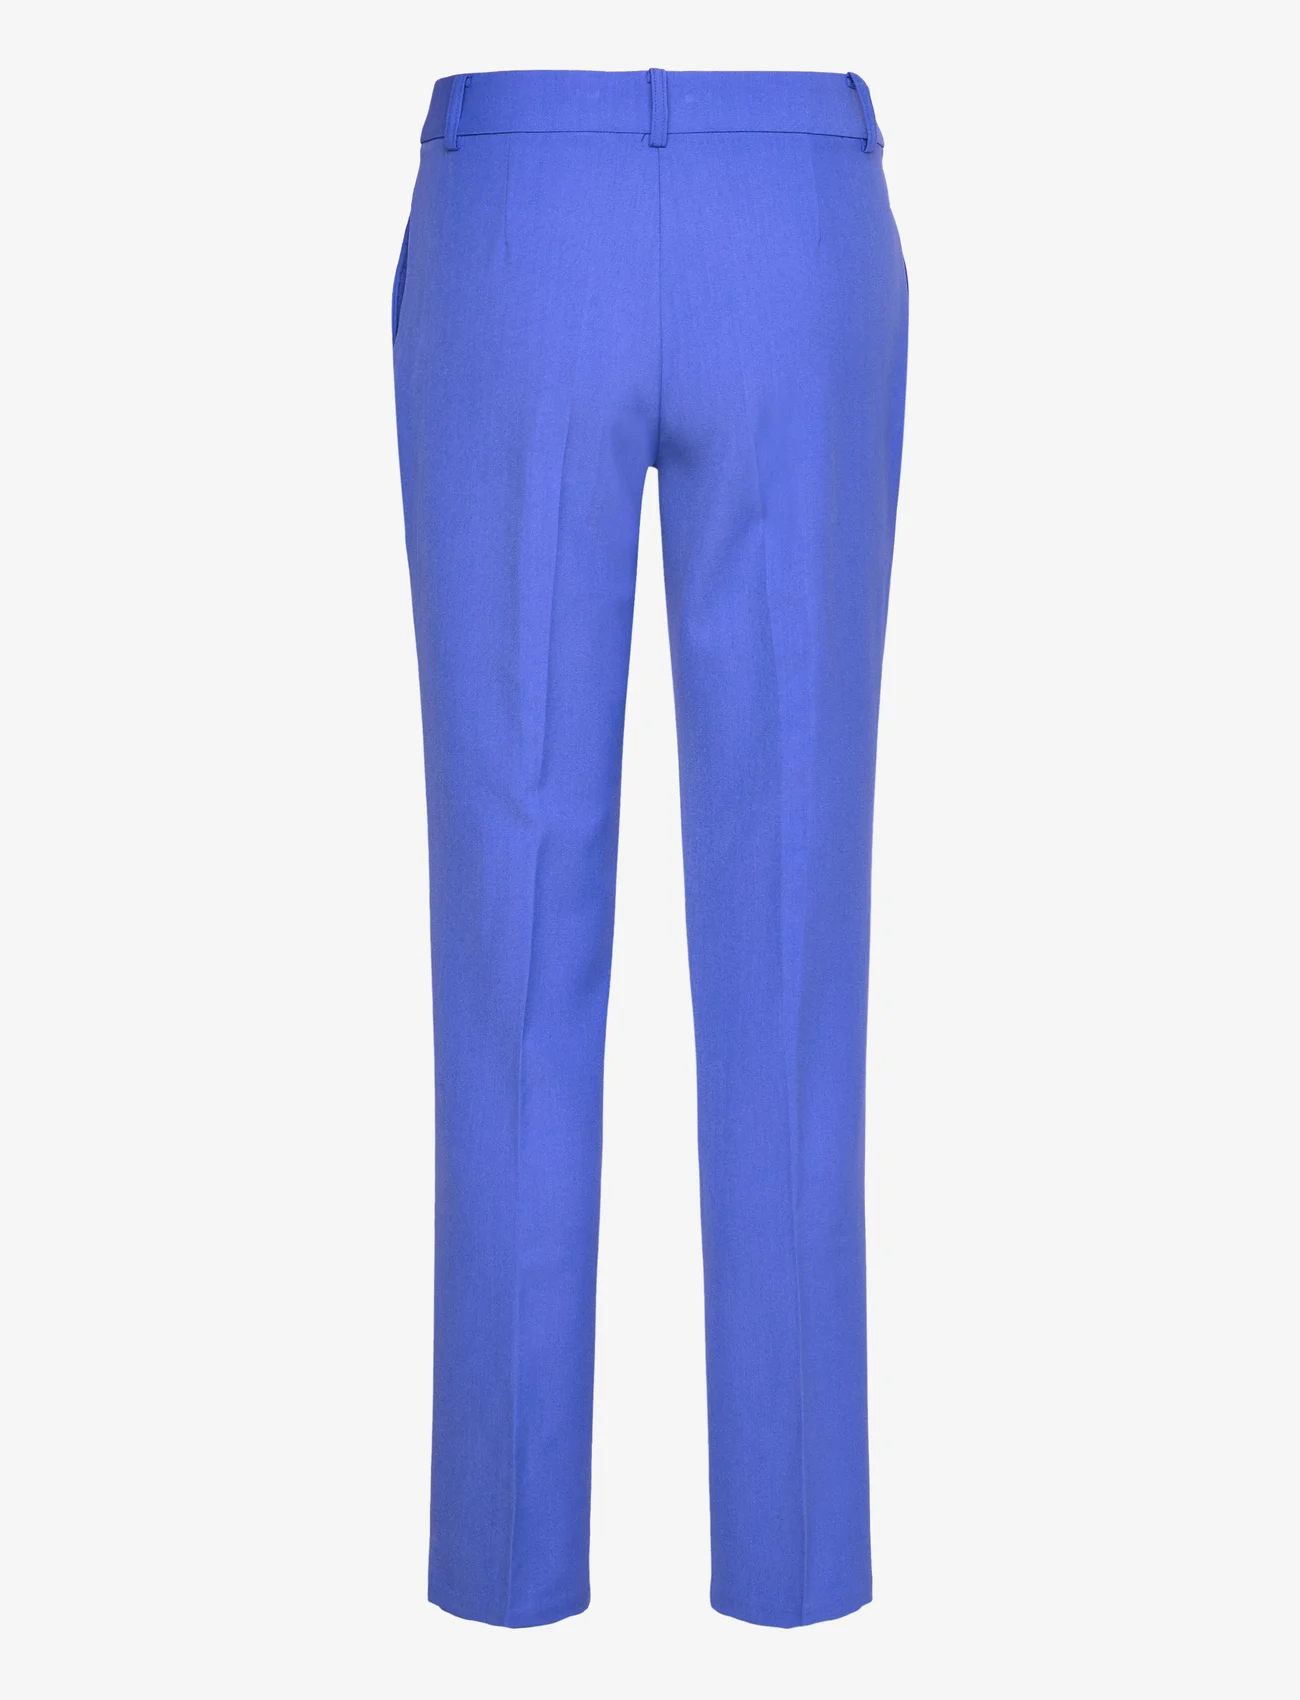 Brandtex - Suiting pants - puvunhousut - clear blue - 1